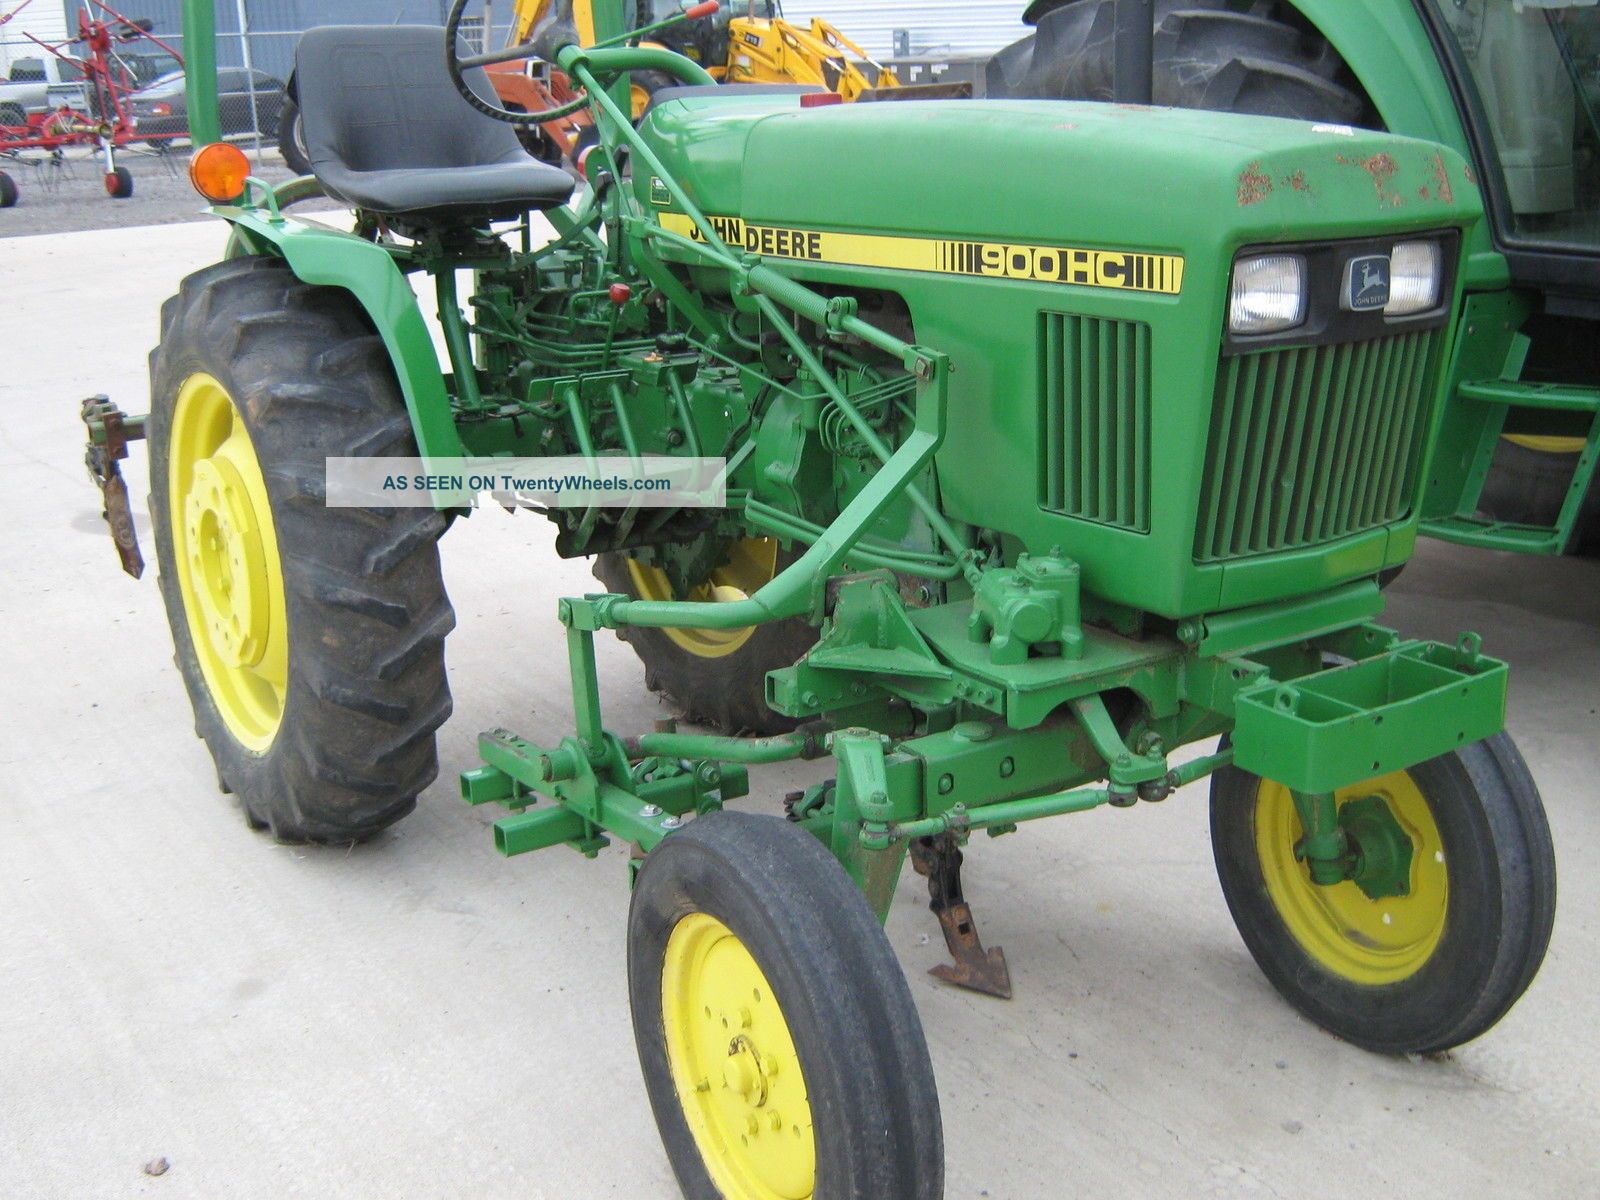 1989 John Deere 900hc Tractor 2wd 25hp Rops Cultivators ...